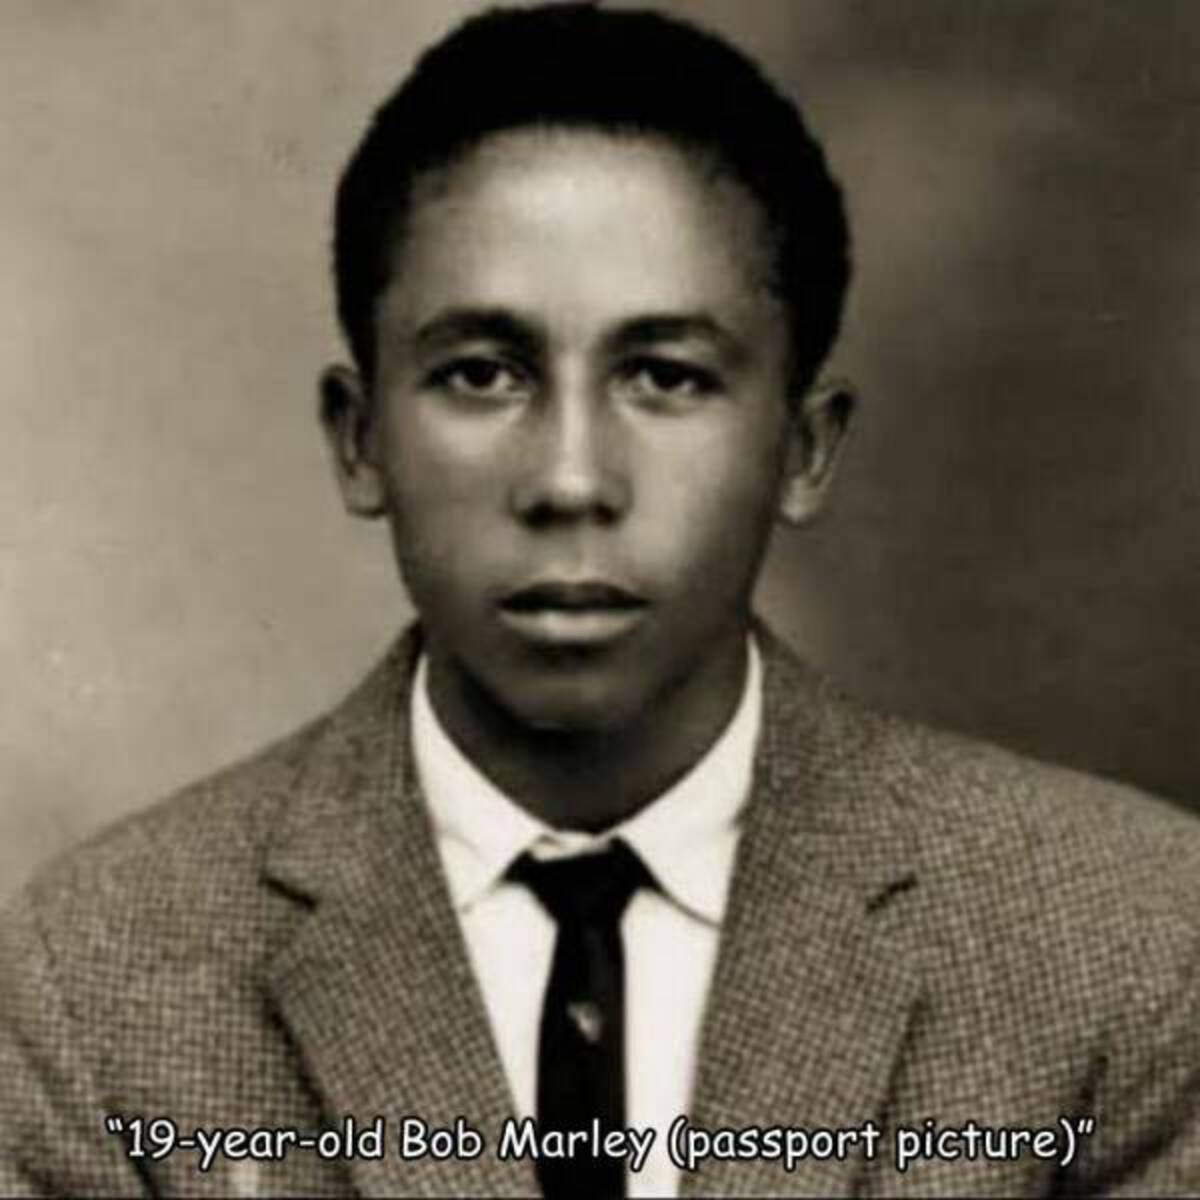 bob marley 1965 - "19yearold Bob Marley passport picture"